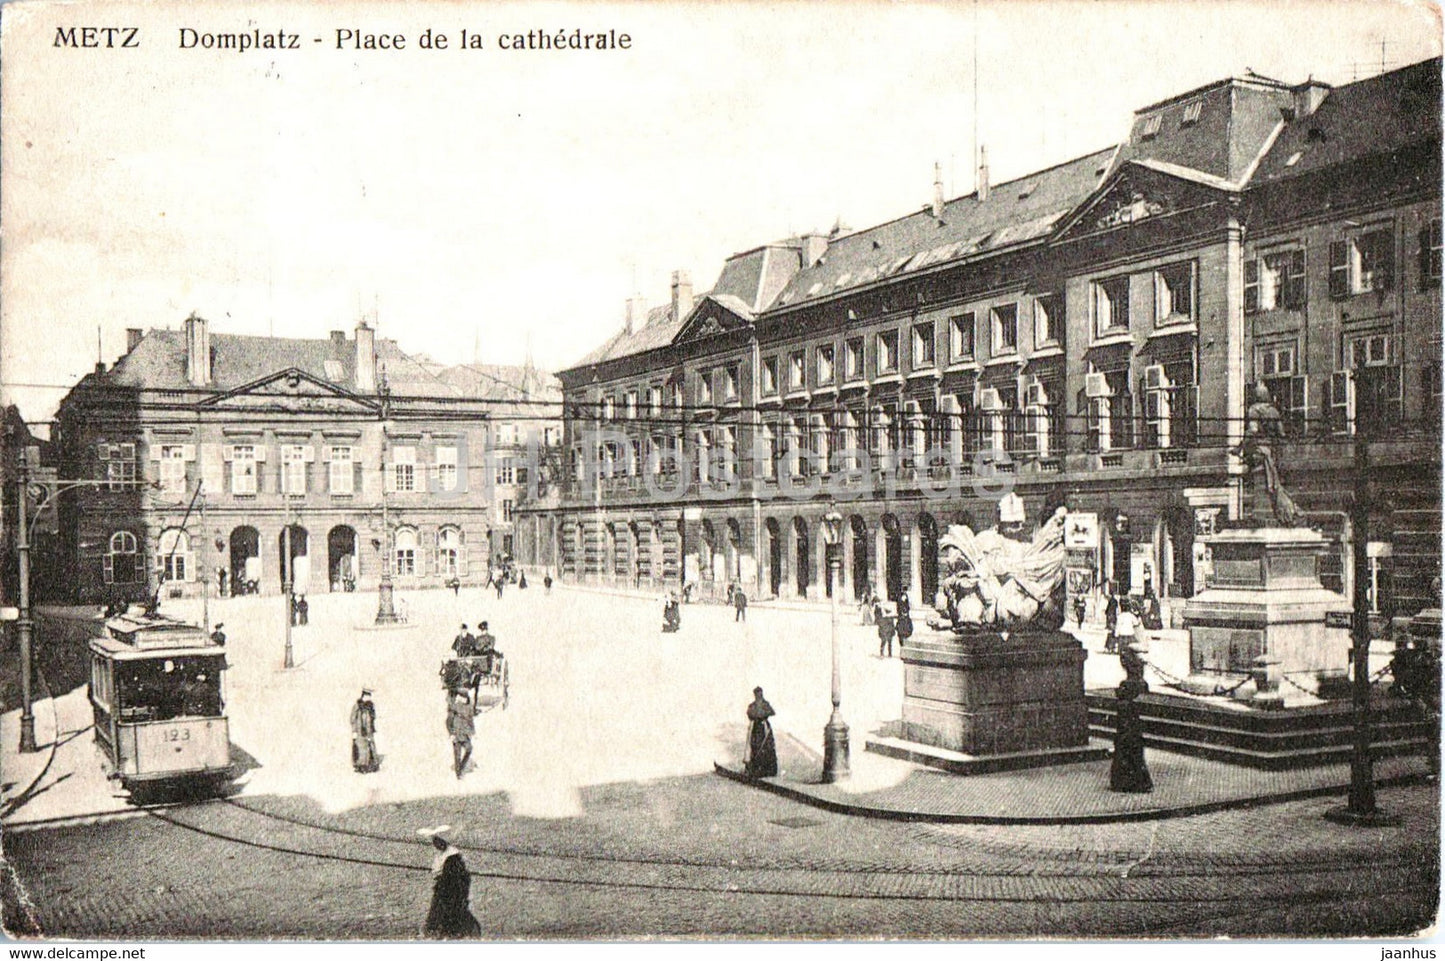 Metz - Domplatz - Place de la Cathedrale - tram - old postcard - 1910 - France - used - JH Postcards